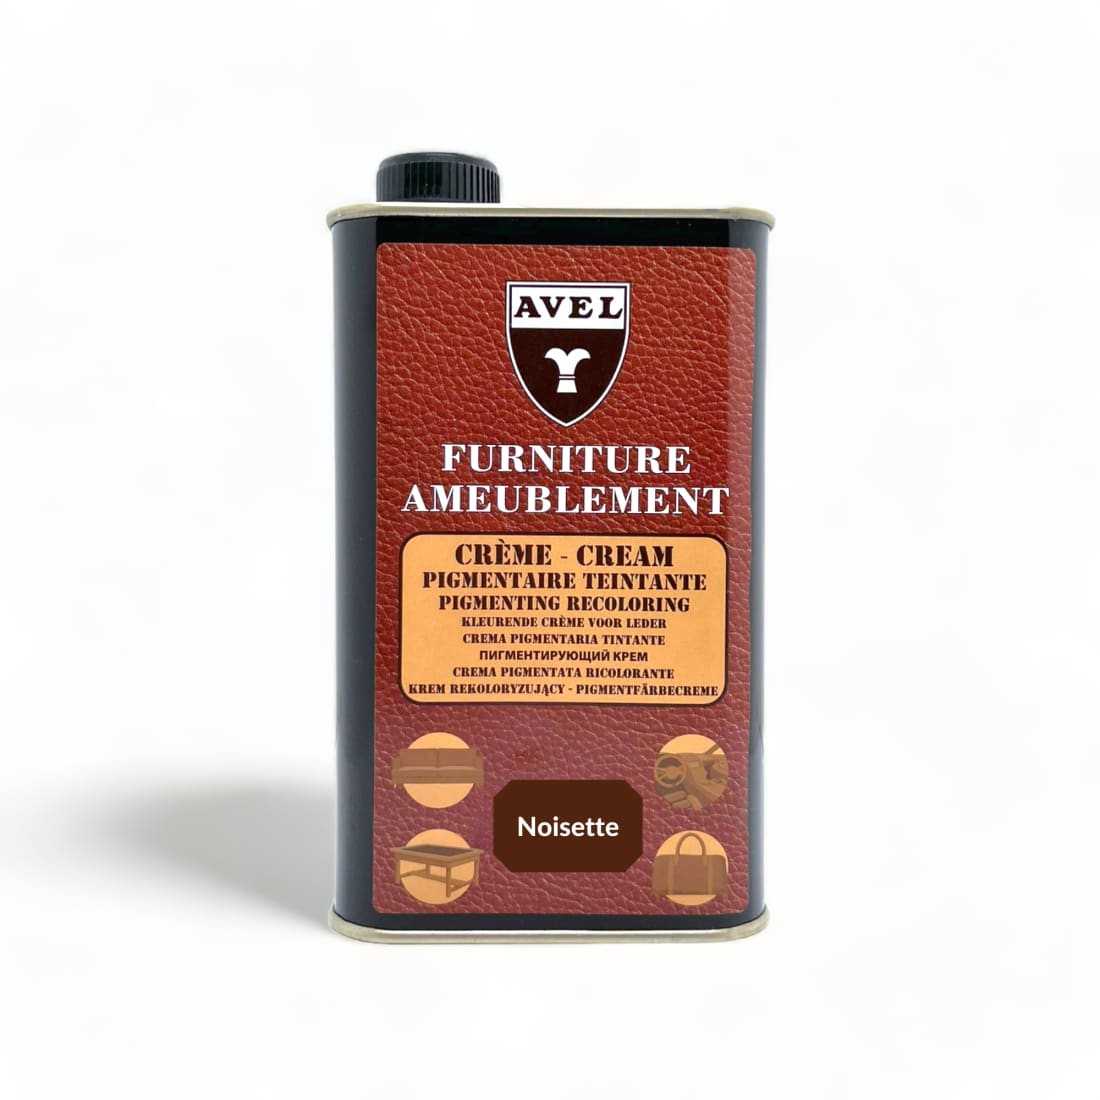 Crème Pigmentaire Teintante Noisette - Avel - 375 ml -